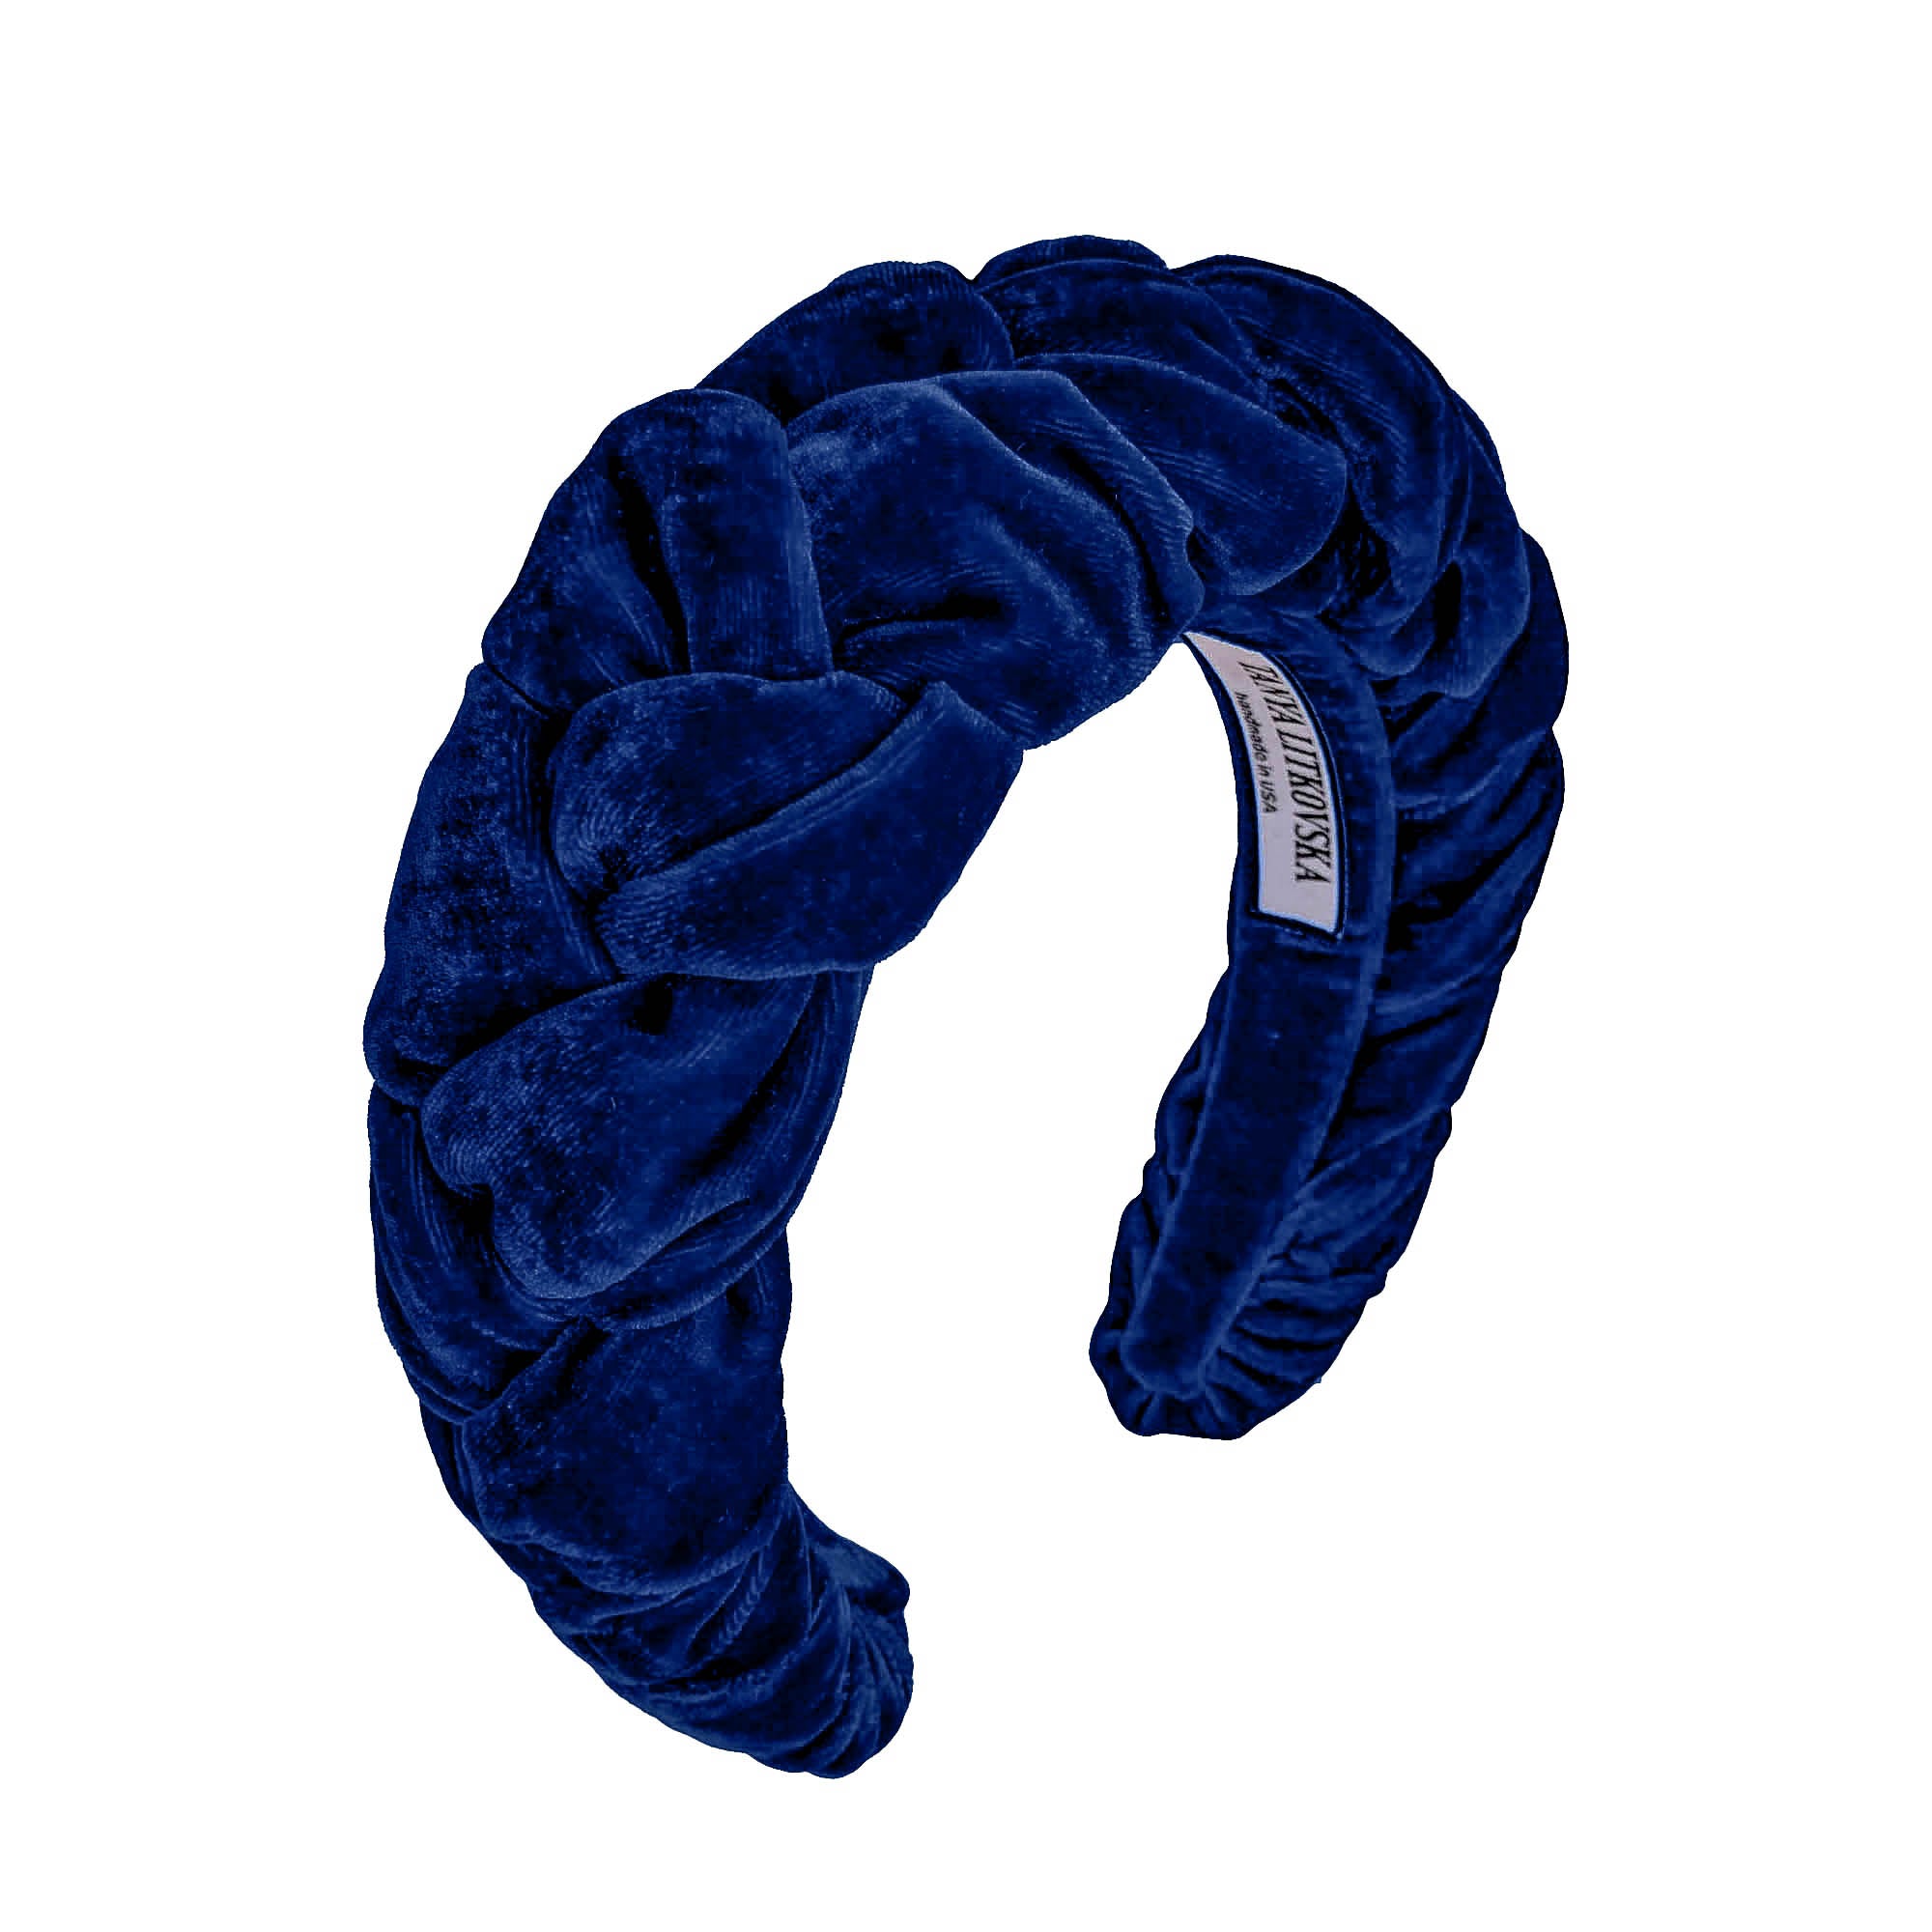 luxury hair accessories | braided velvet headbands | wide headbands by tanya litkovska